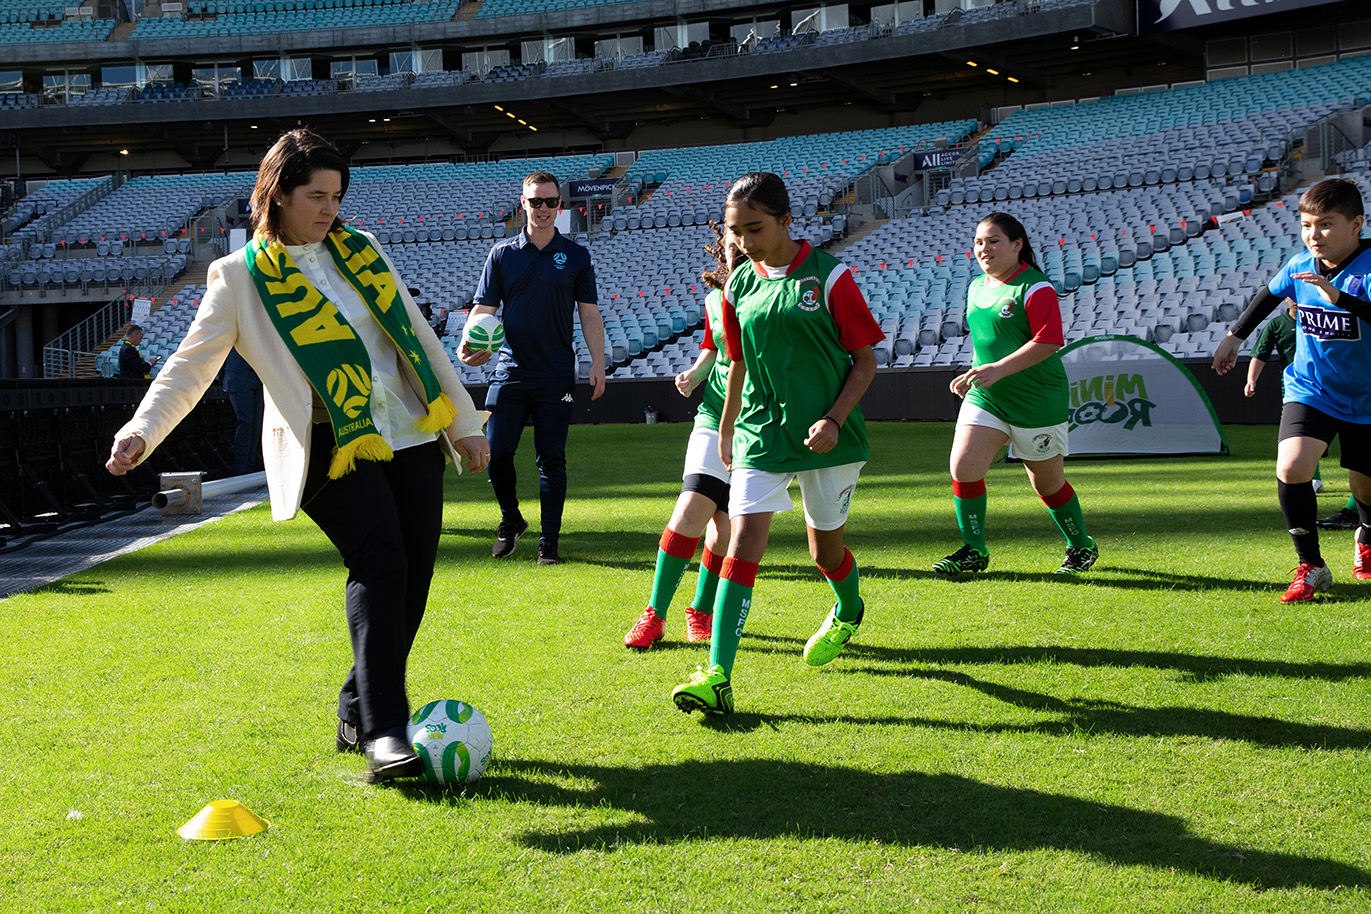 Football Australia Head of Women's Football, Women's World Cup Legacy & Inclusion Sarah Walsh